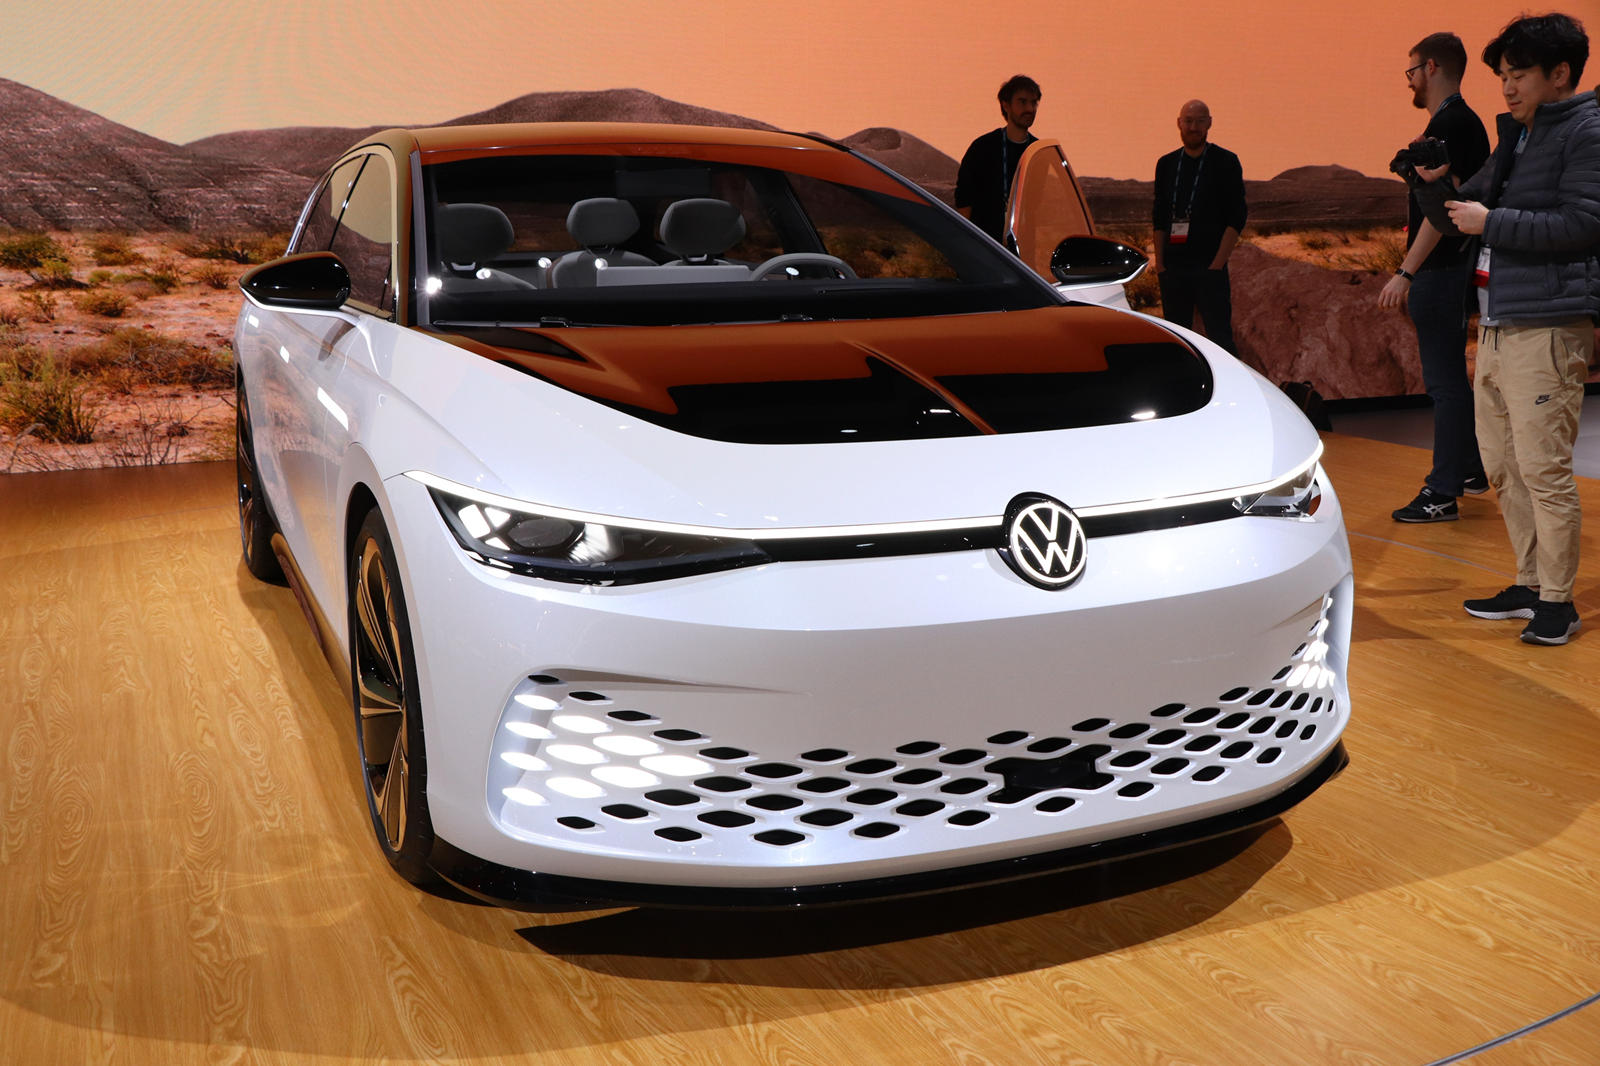 Volkswagen's Electric Cars Have Big Advantage Over Competitors CarBuzz